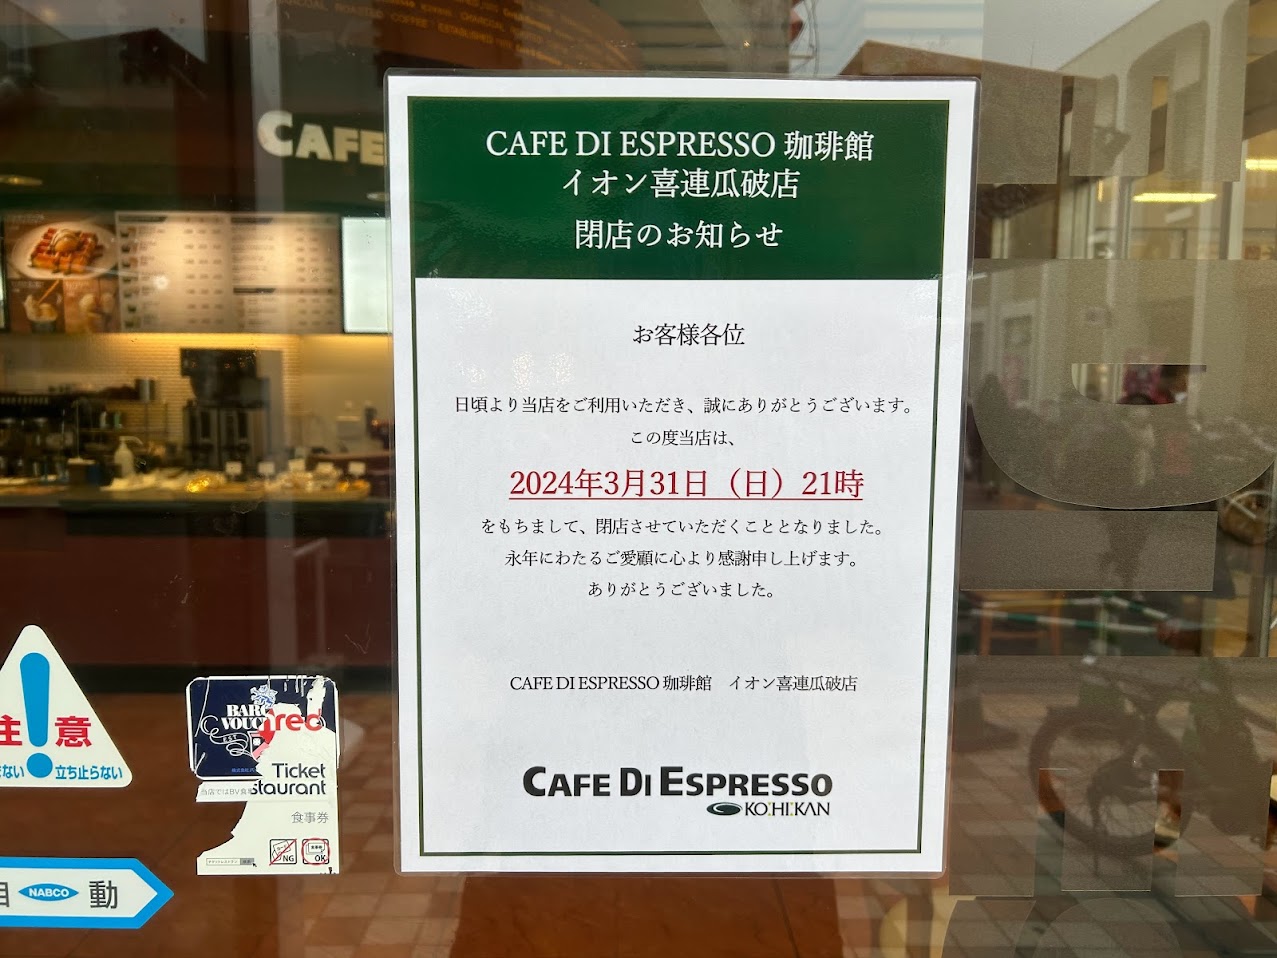 CAFE DI ESPRESSO 珈琲館 イオン喜連瓜破店閉店のお知らせ